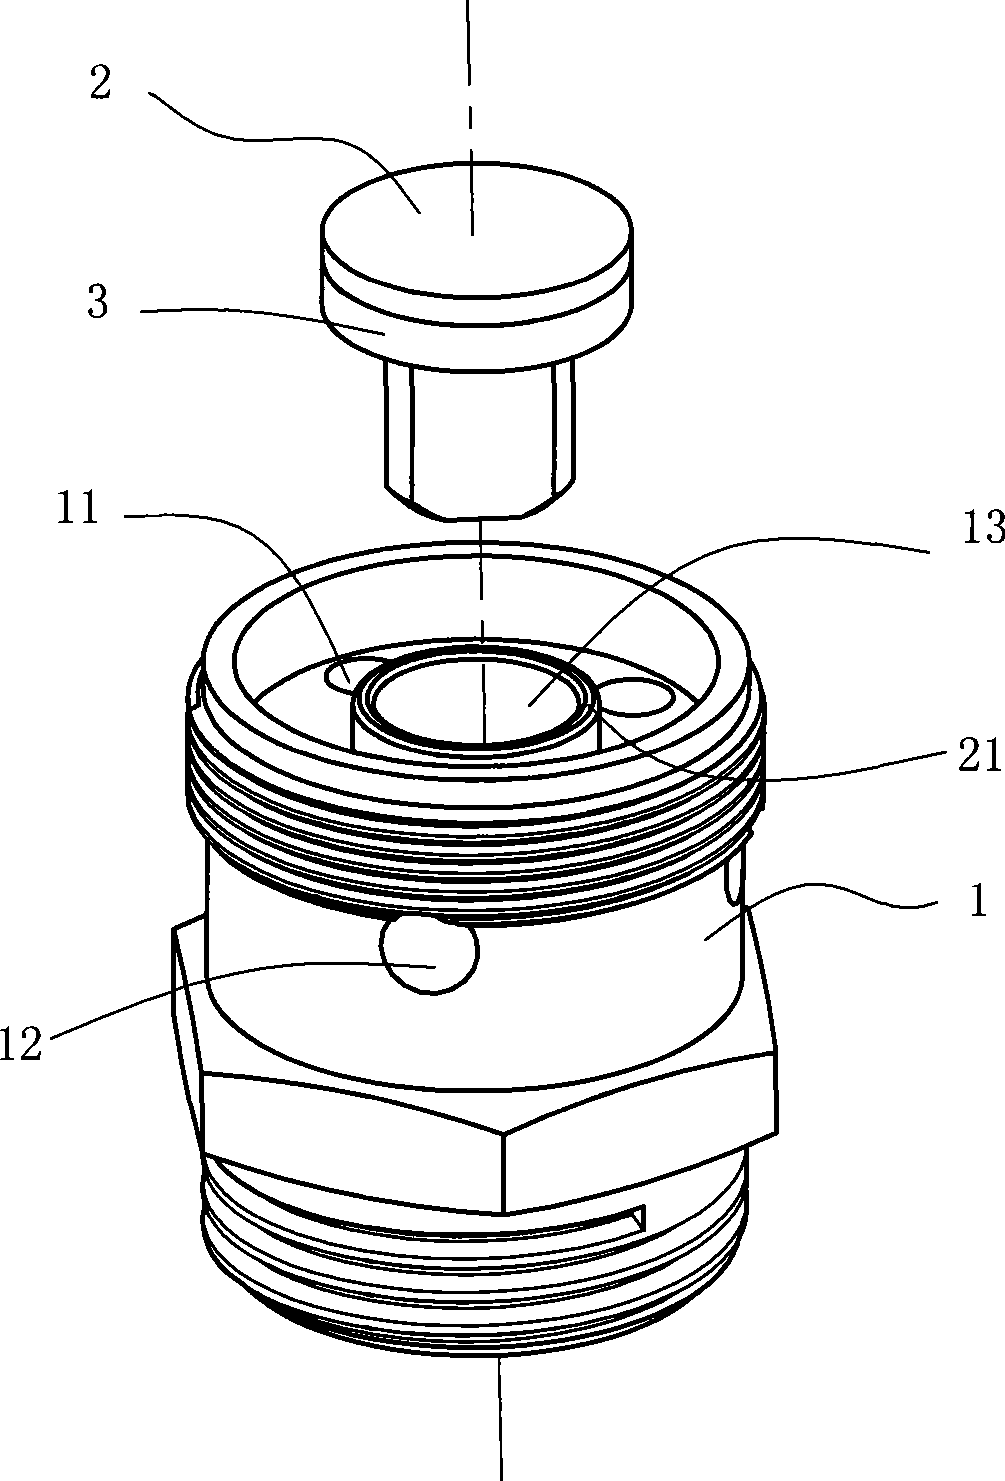 Check valve structure